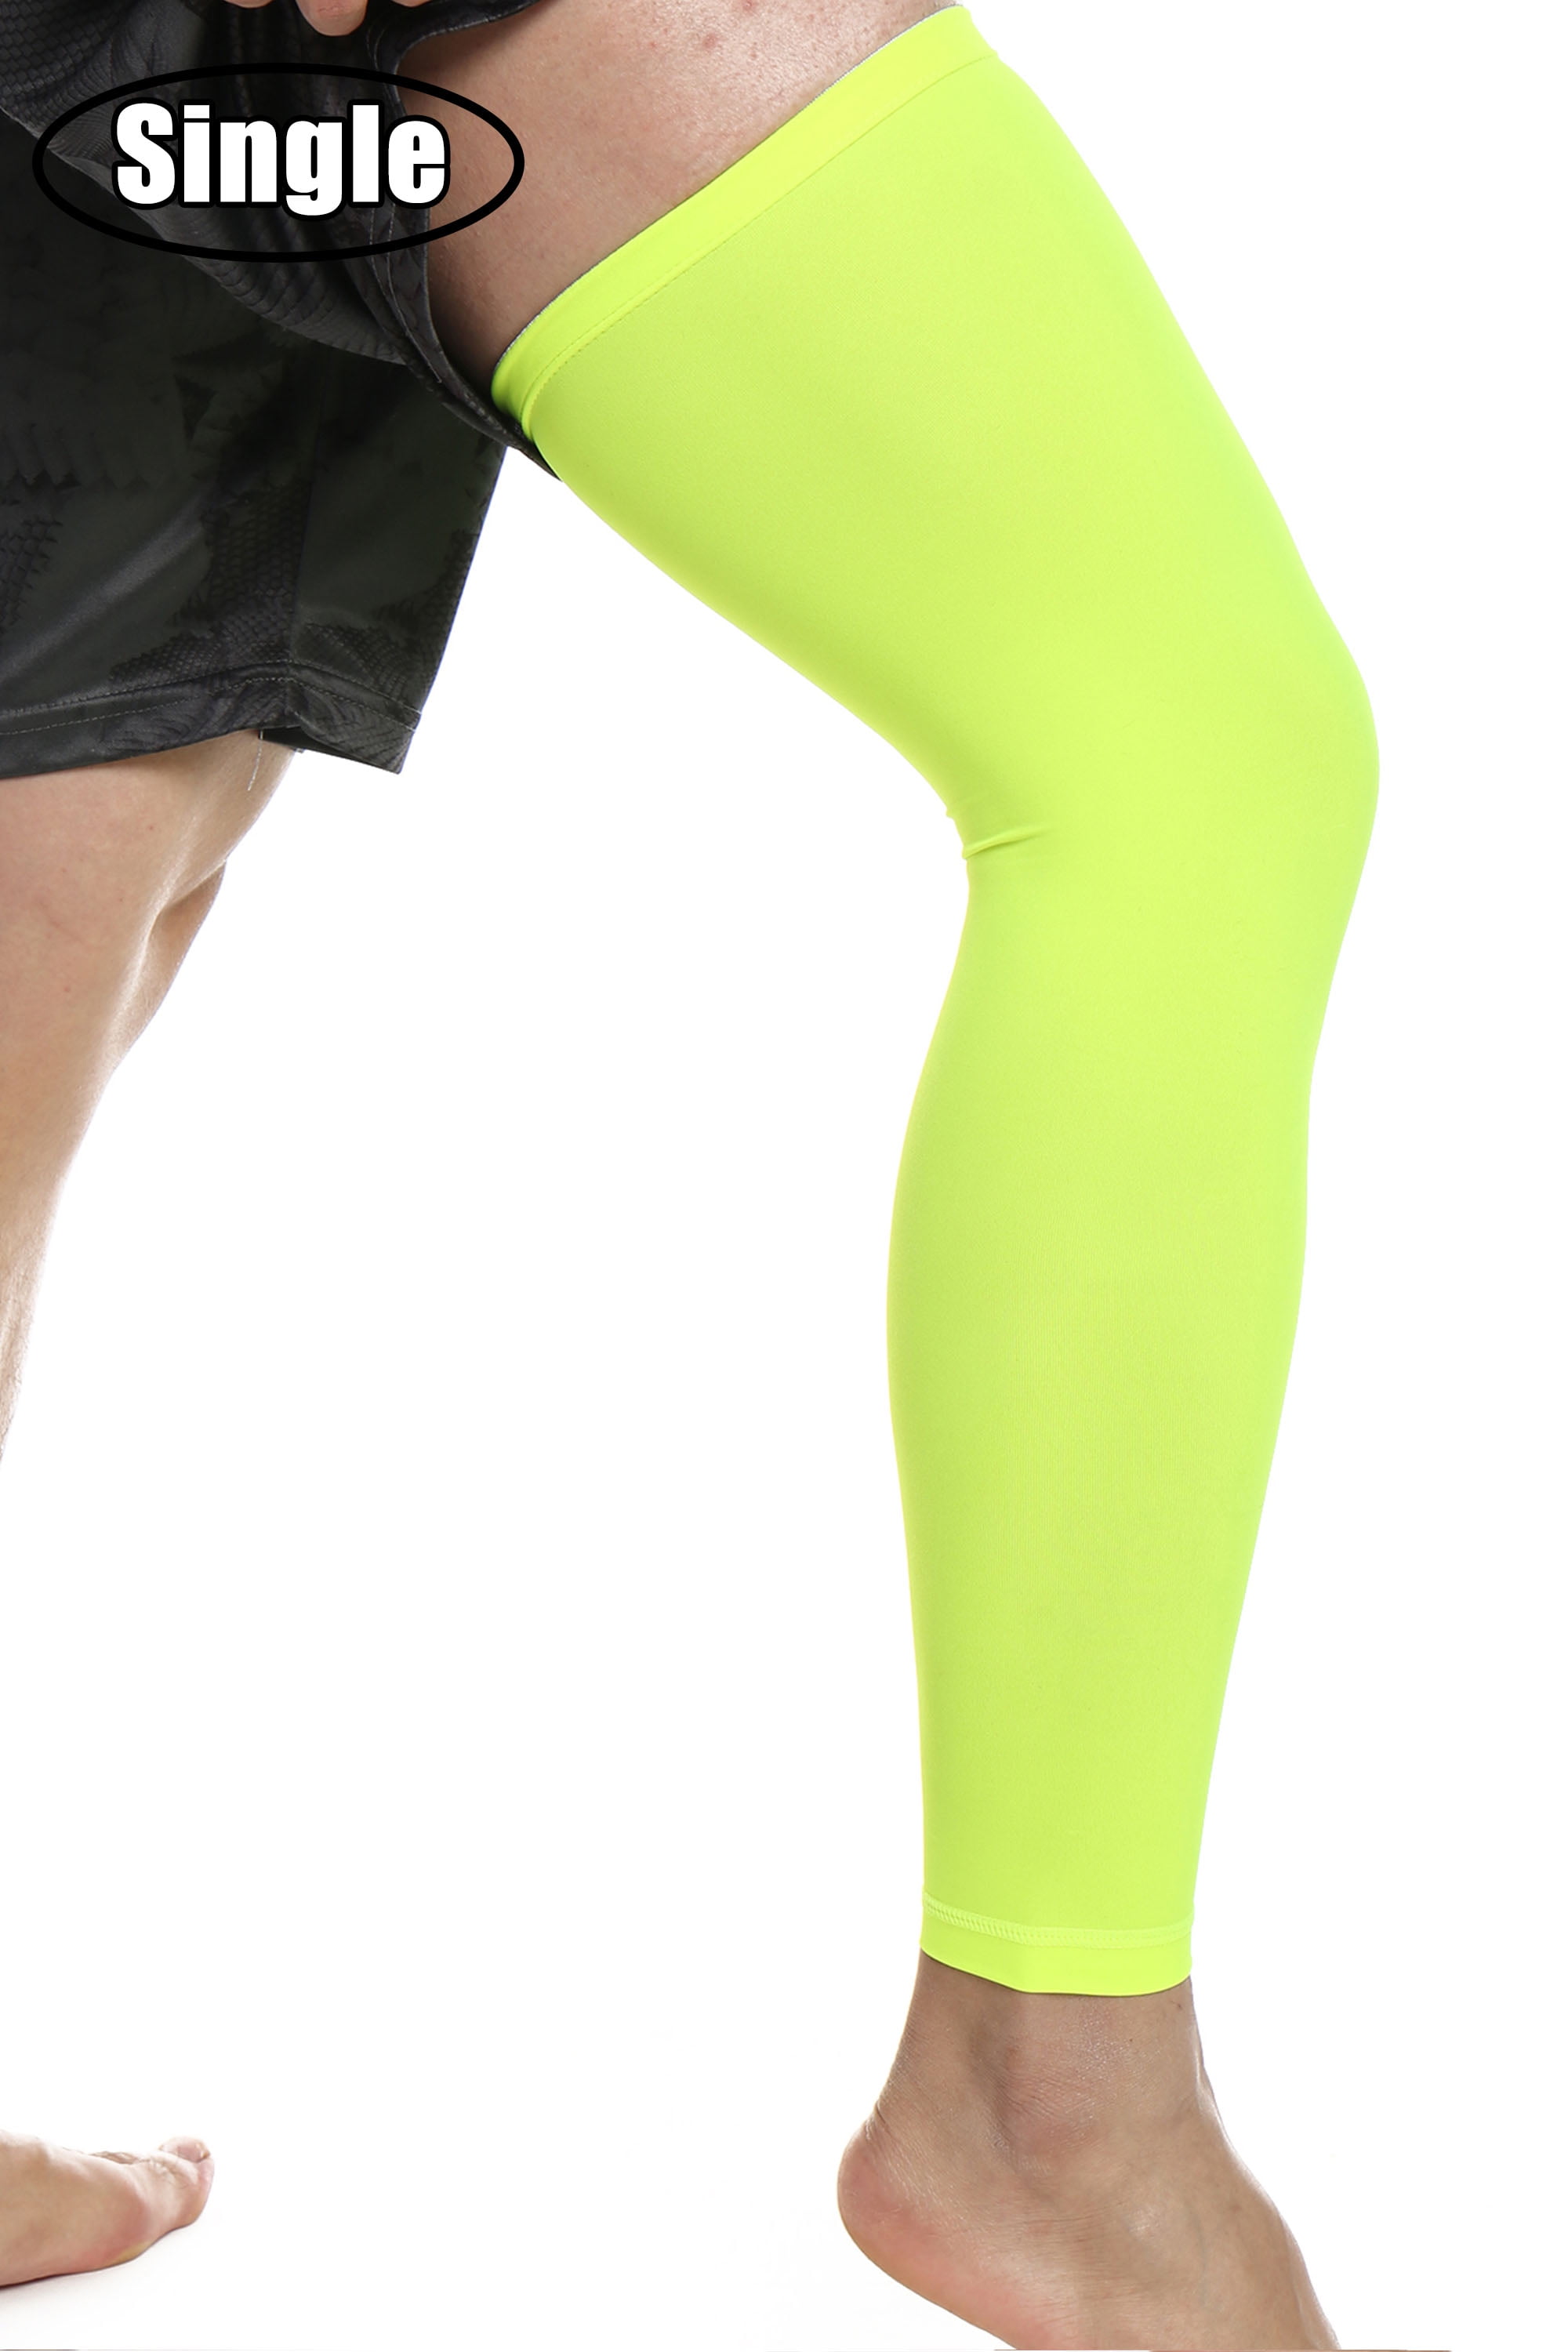 Details about   1 piece Sports Leg Calf Leg Brace Support Stretch Sleeve Compression Running 